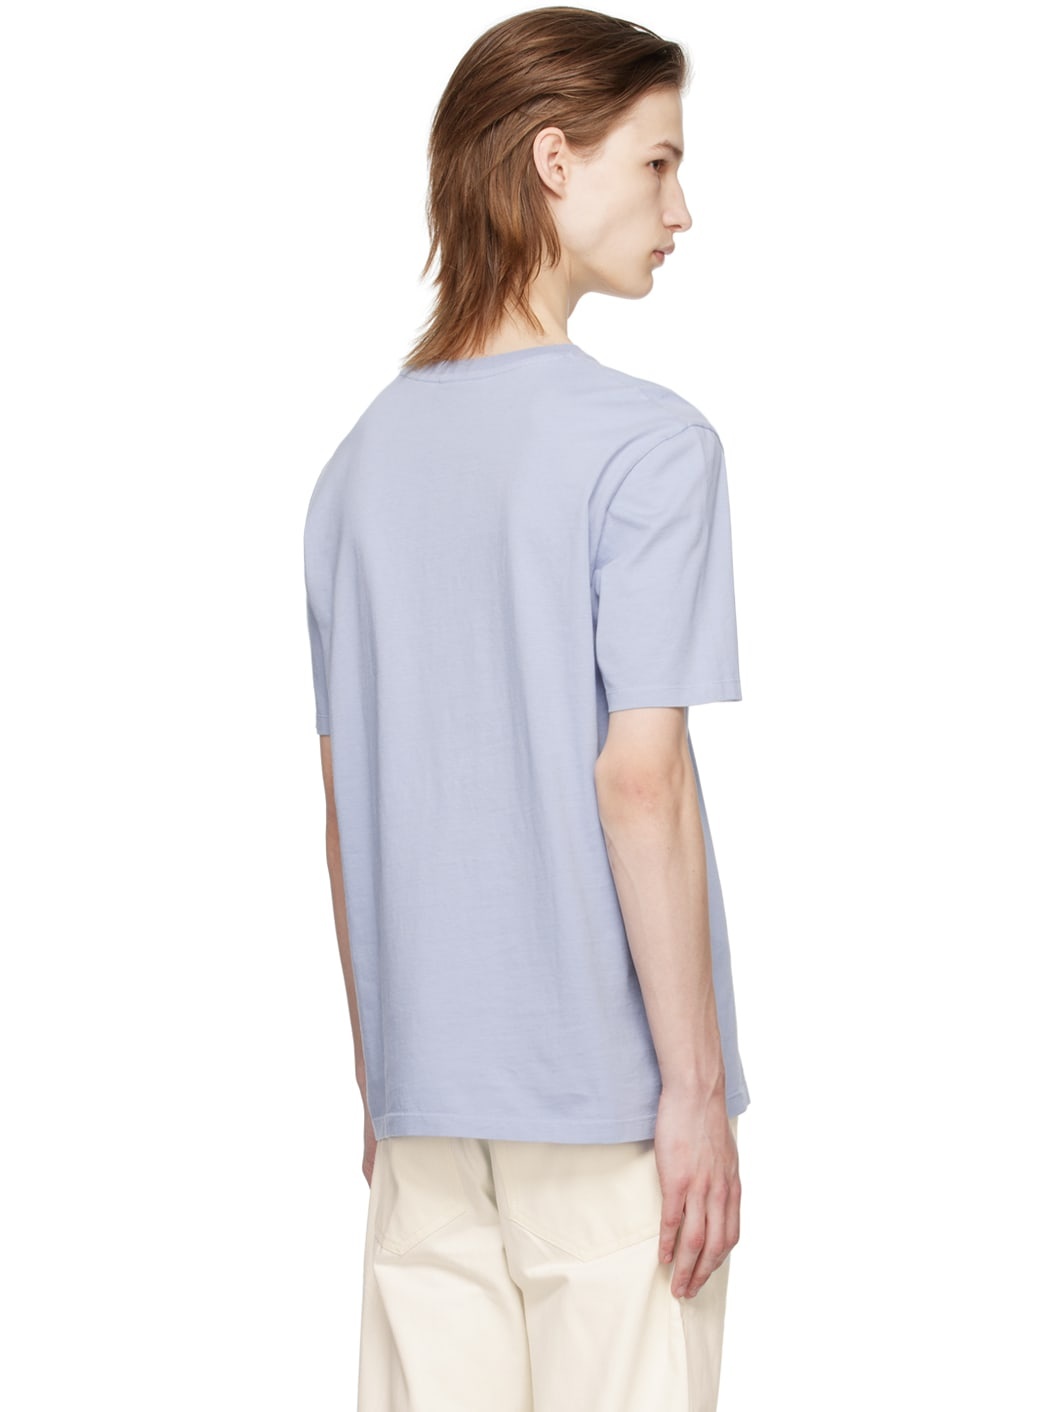 Blue Chillax Fox T-Shirt - 3